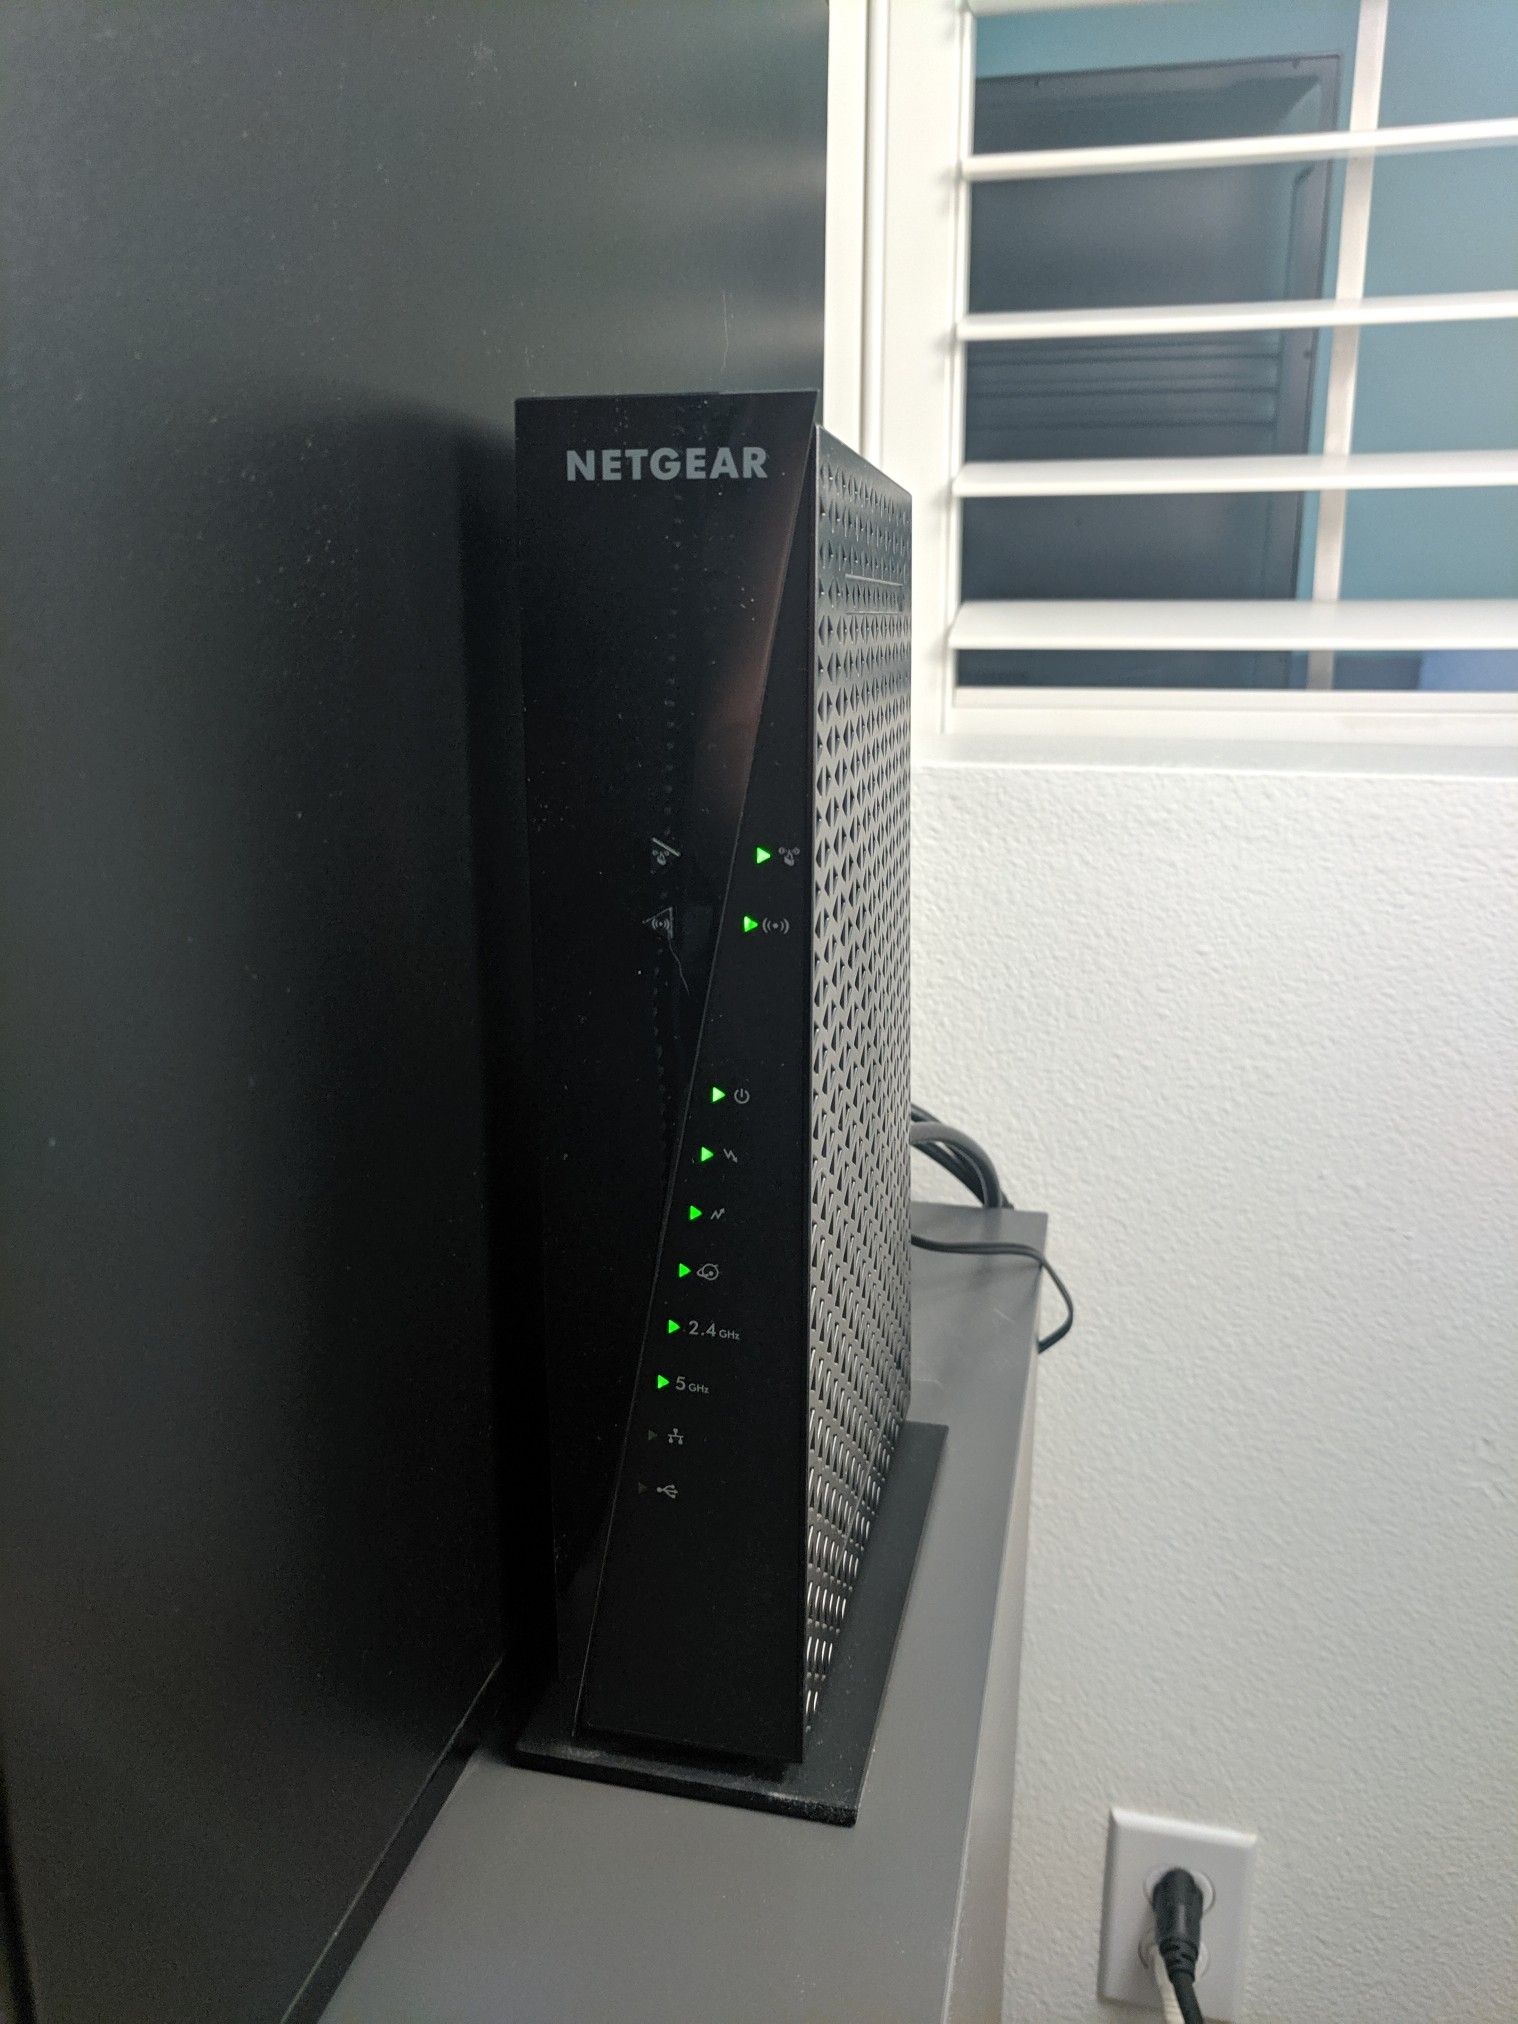 Netgear C6300 AC1750 WiFi Modem/Router Combo